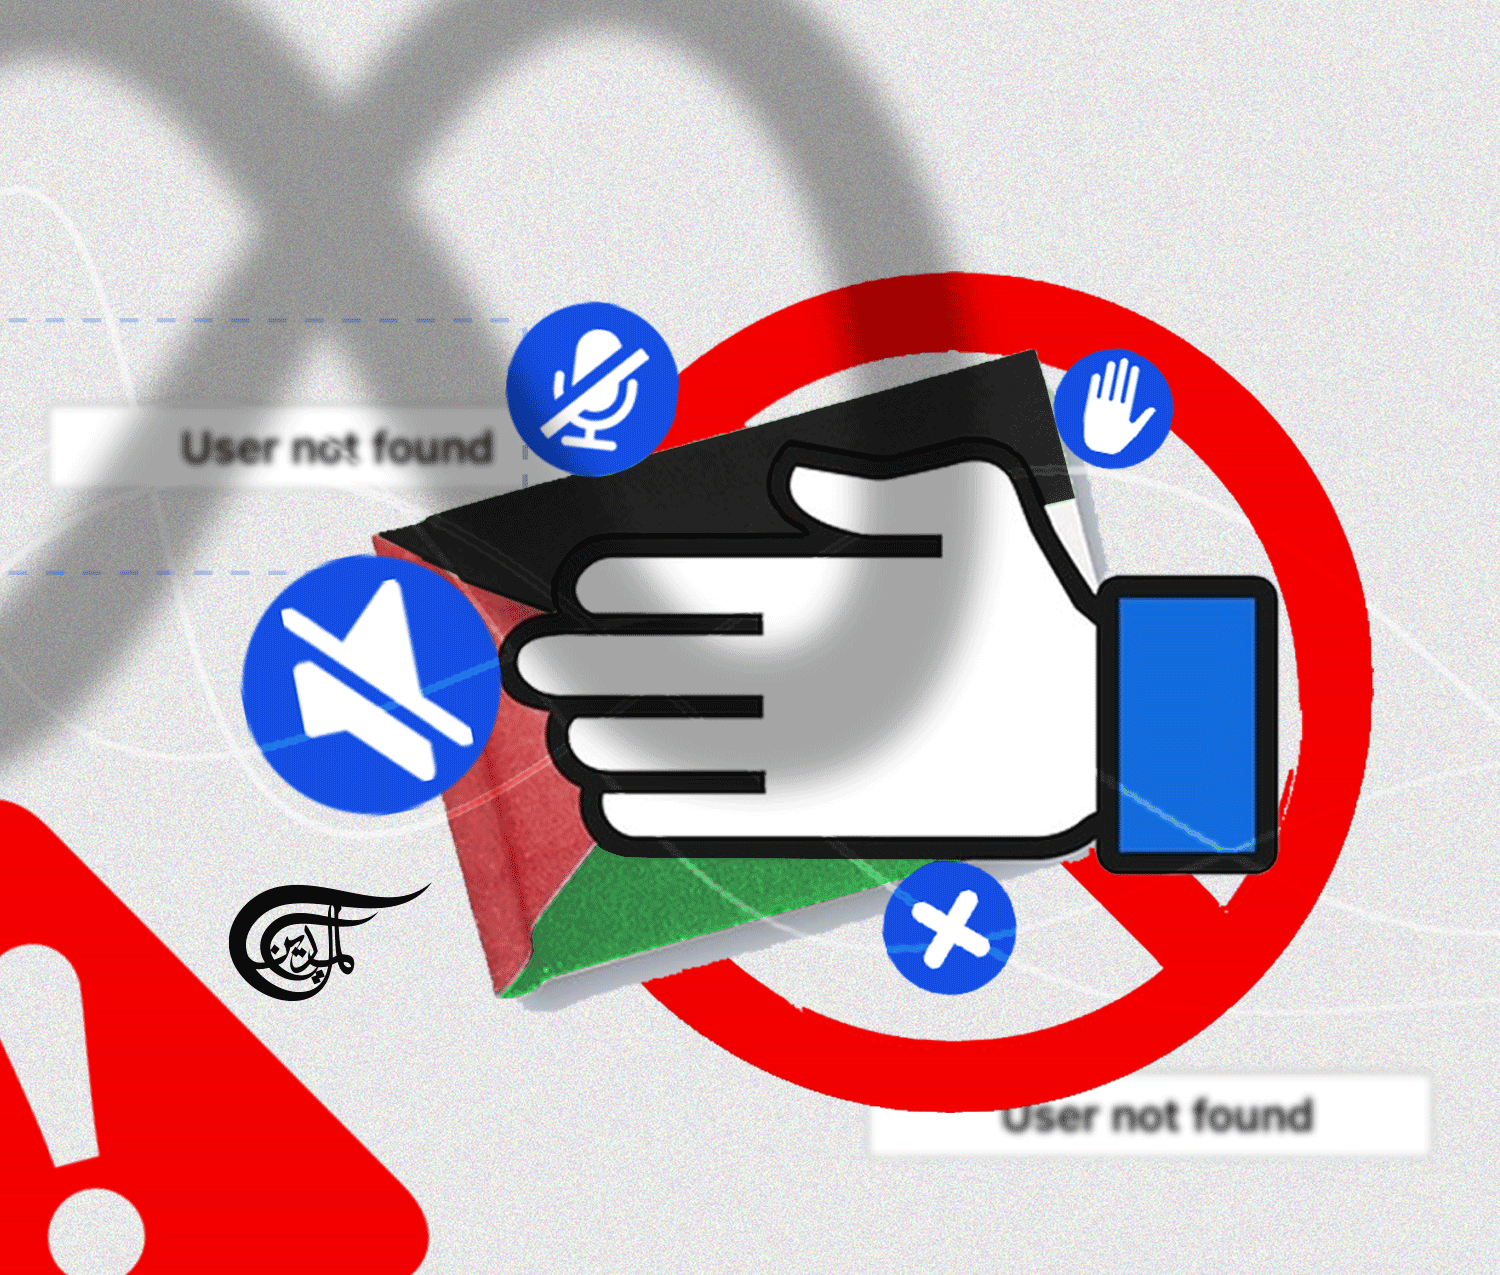 Pro-Palestinian social media users turn to algospeak to avoid